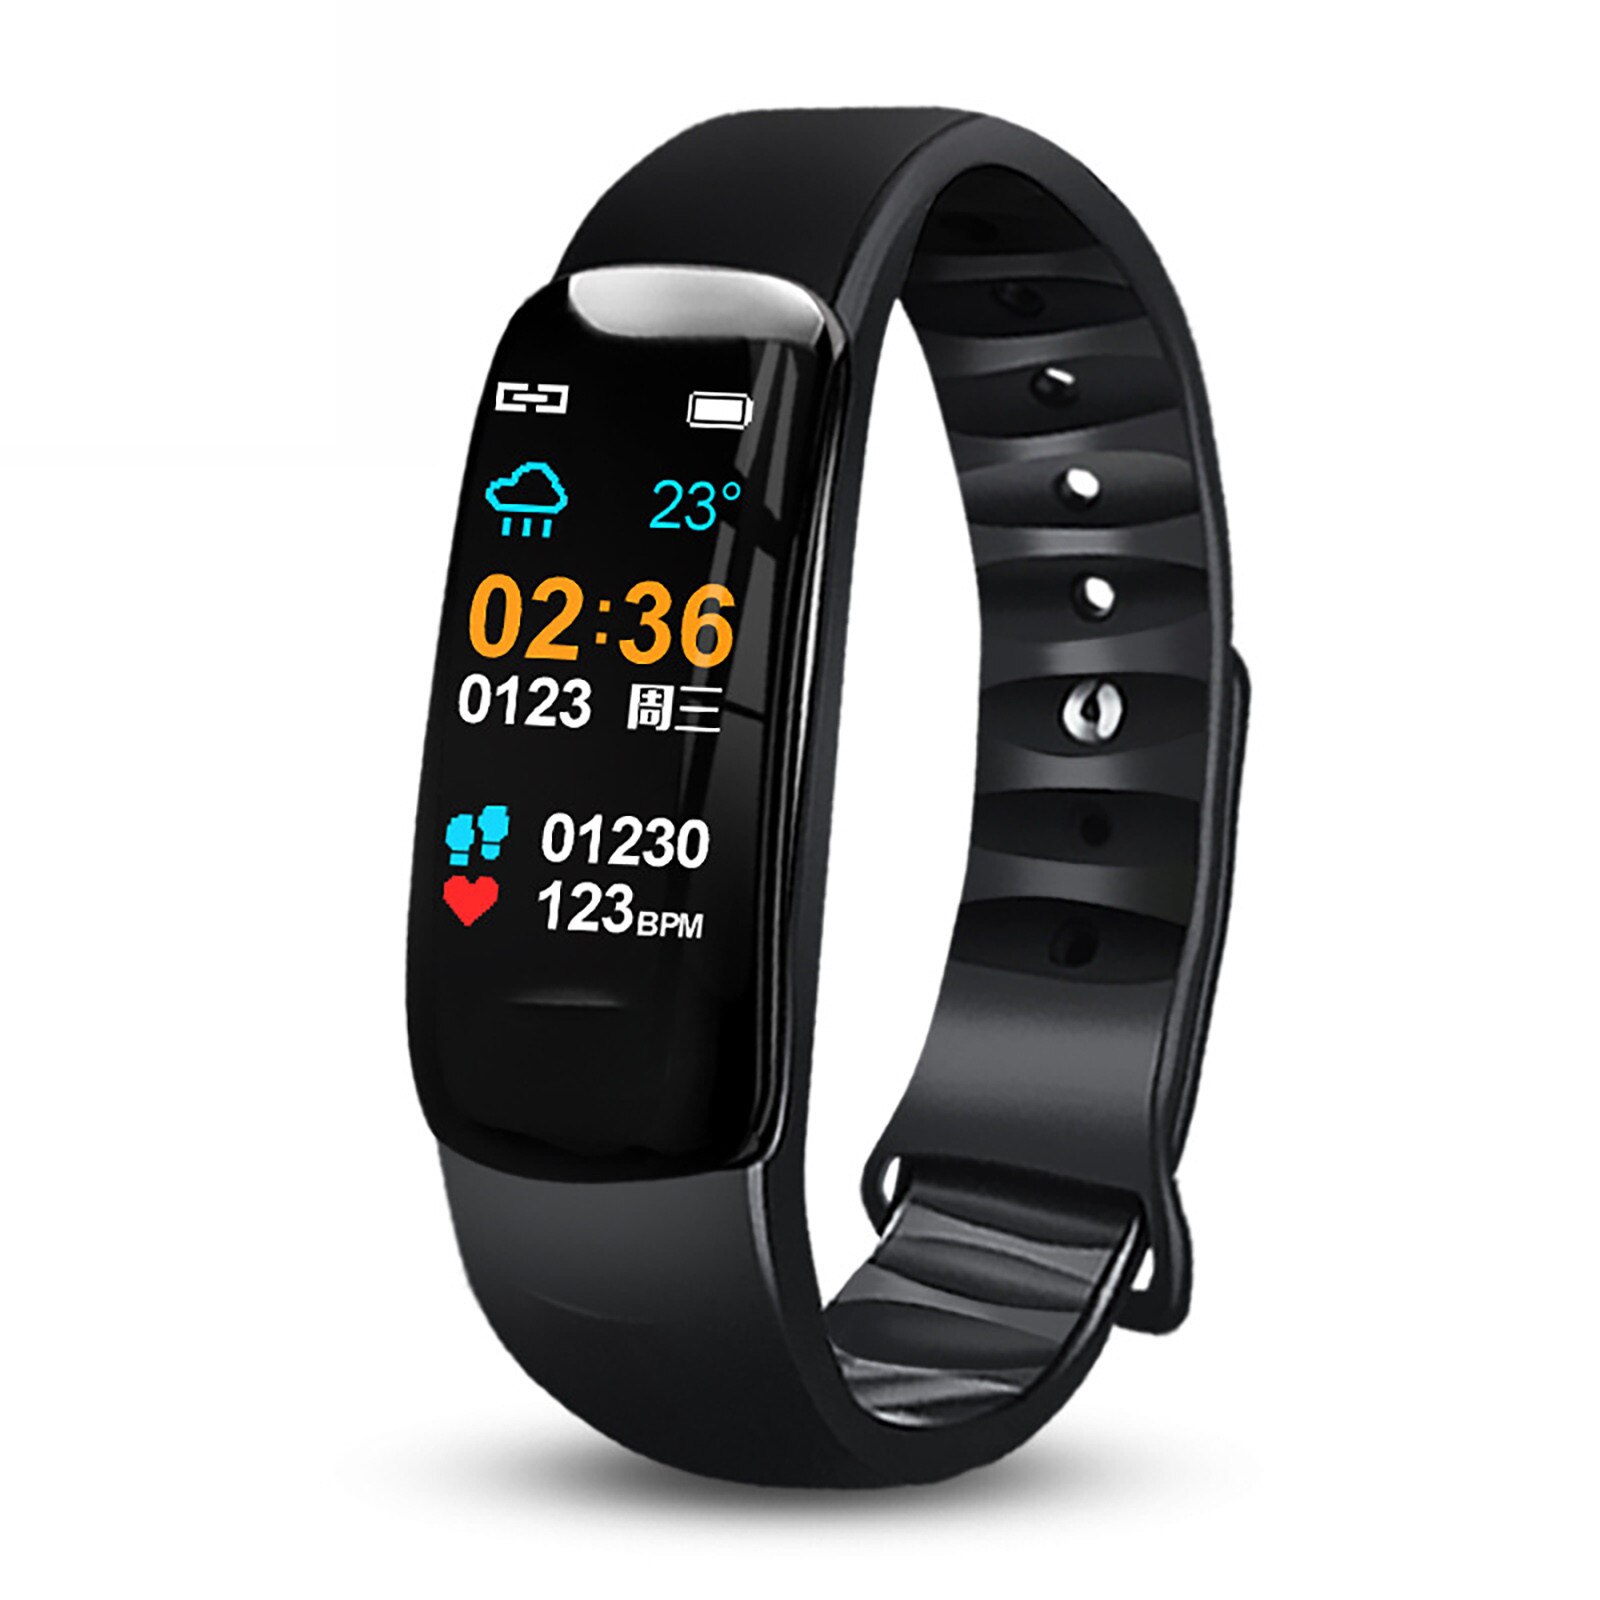 Sport Smart Wrist Watch Bracelet Display Fitness Gauge Step Tracker Digital LCD Pedometer Run Step Walking Calorie Counter